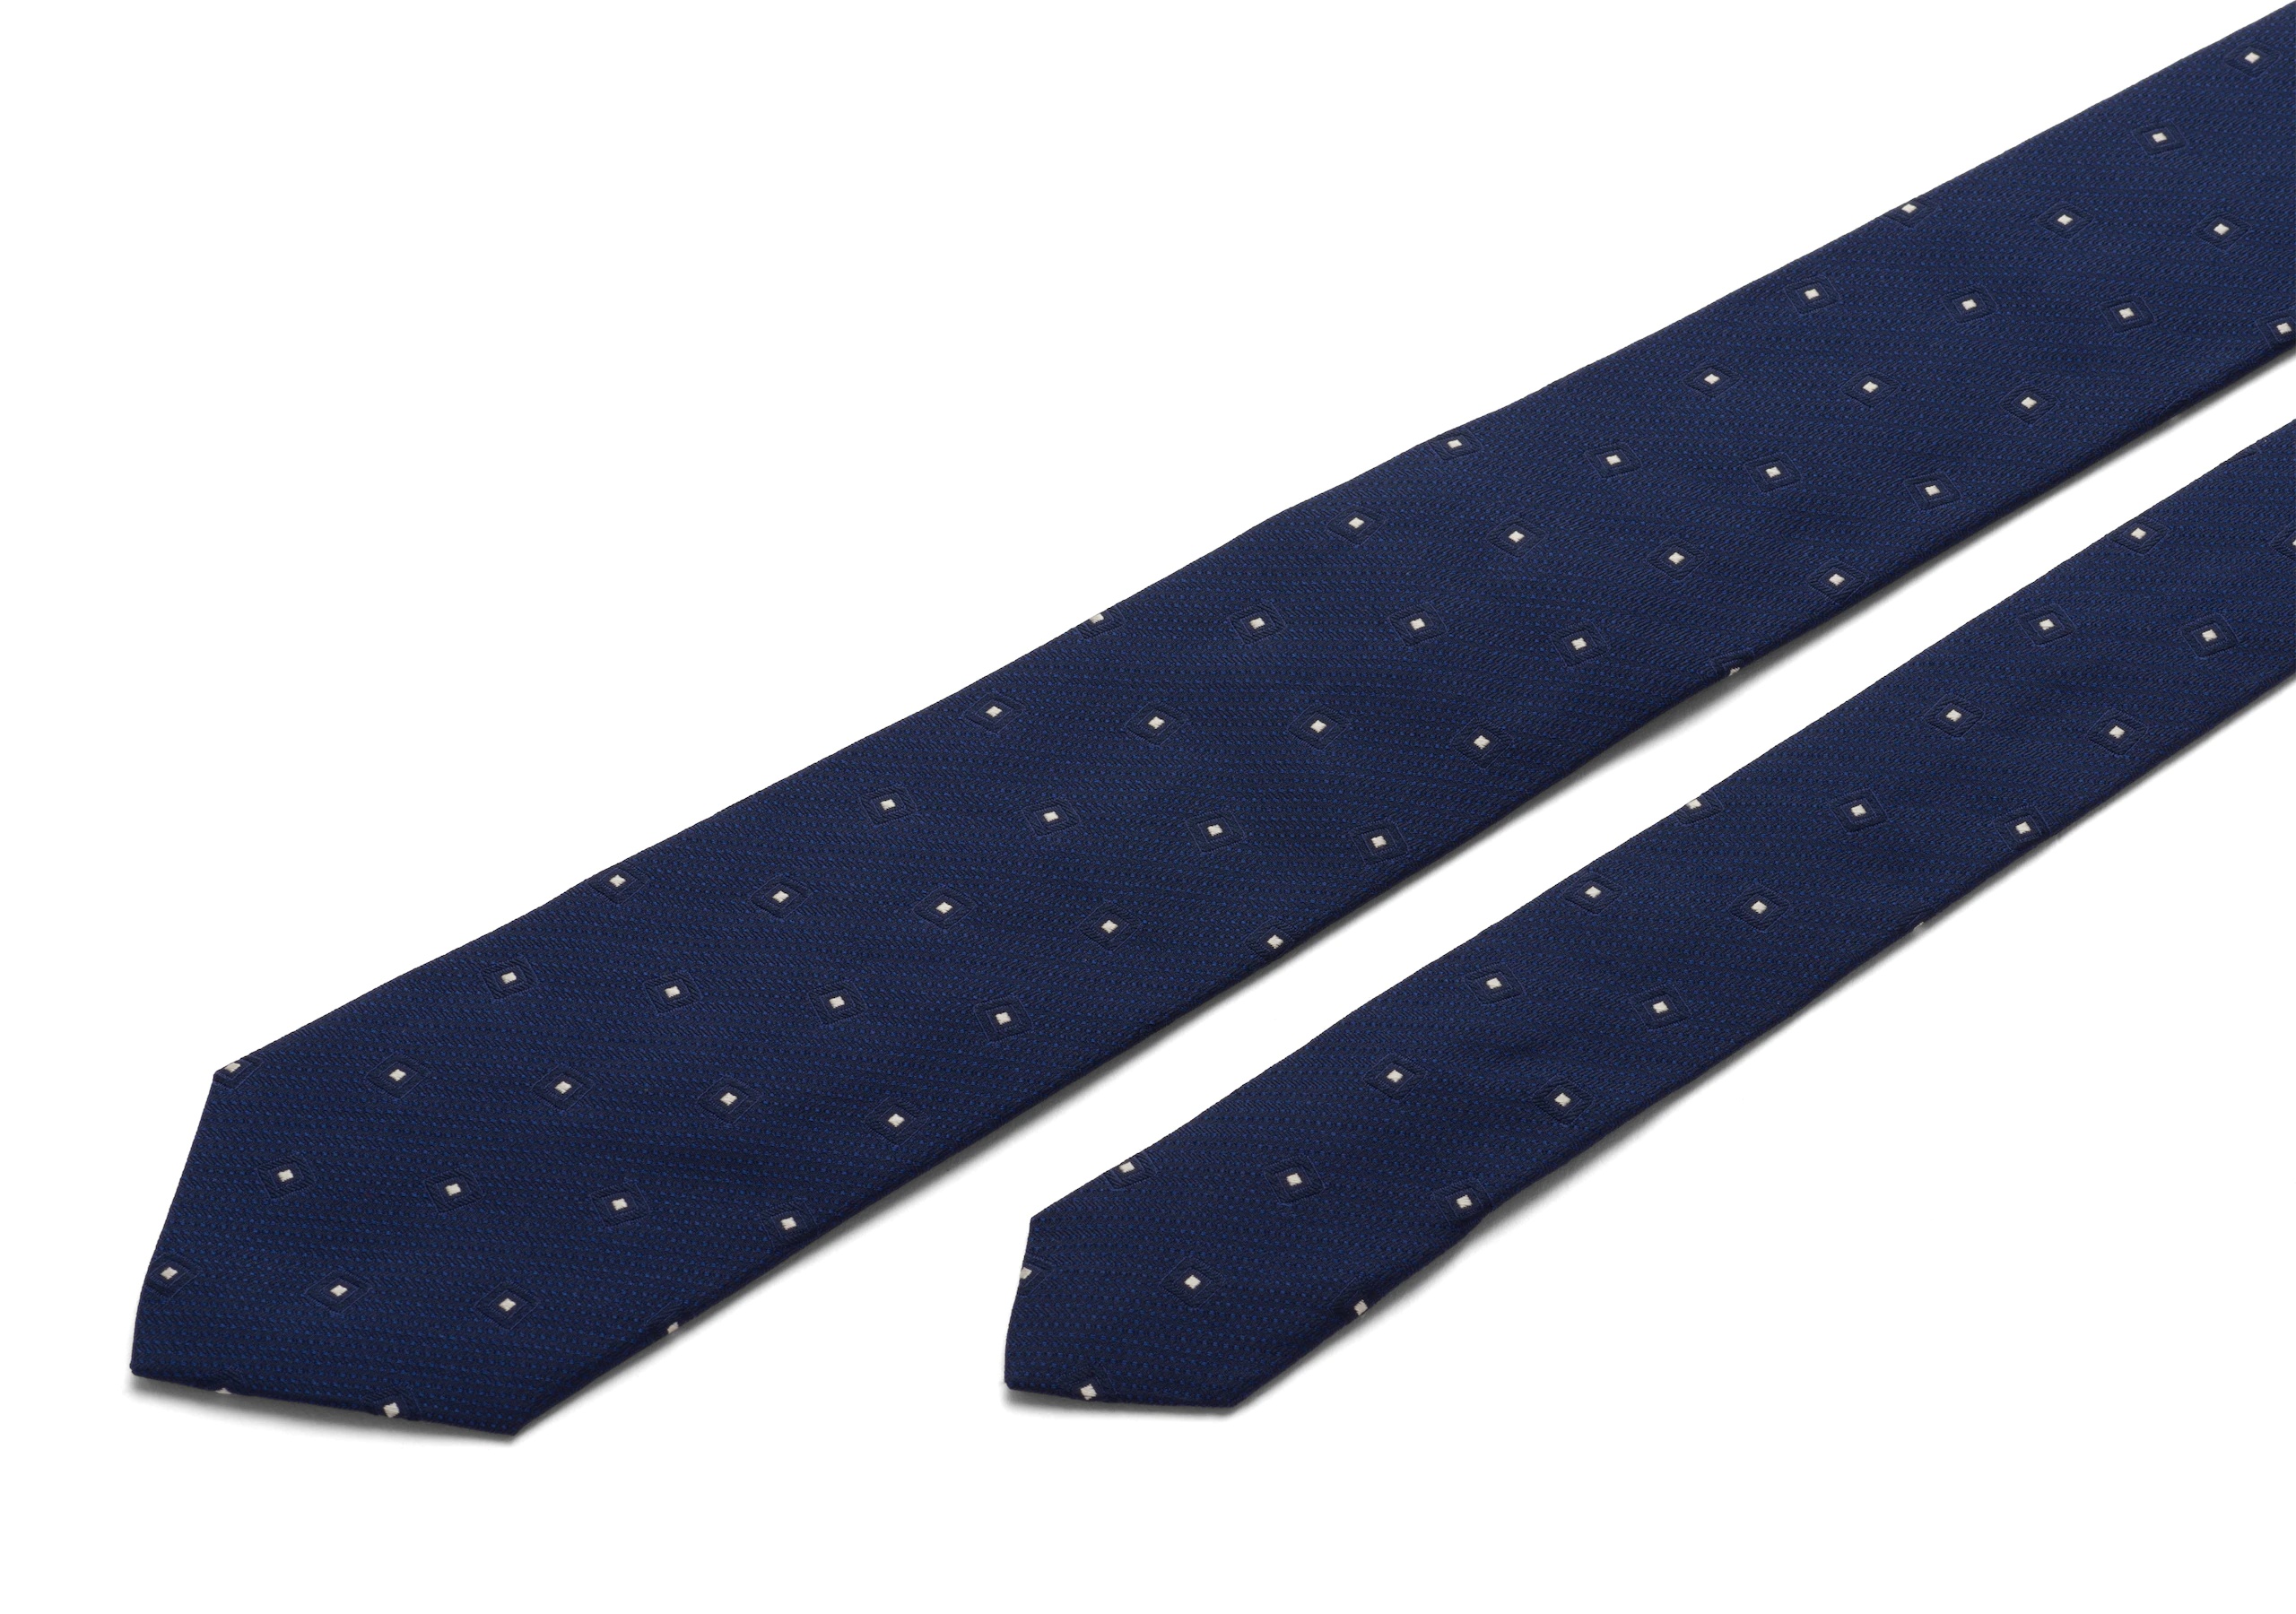 Diamond motif tie
Diamond Motif Tie Navy - 2